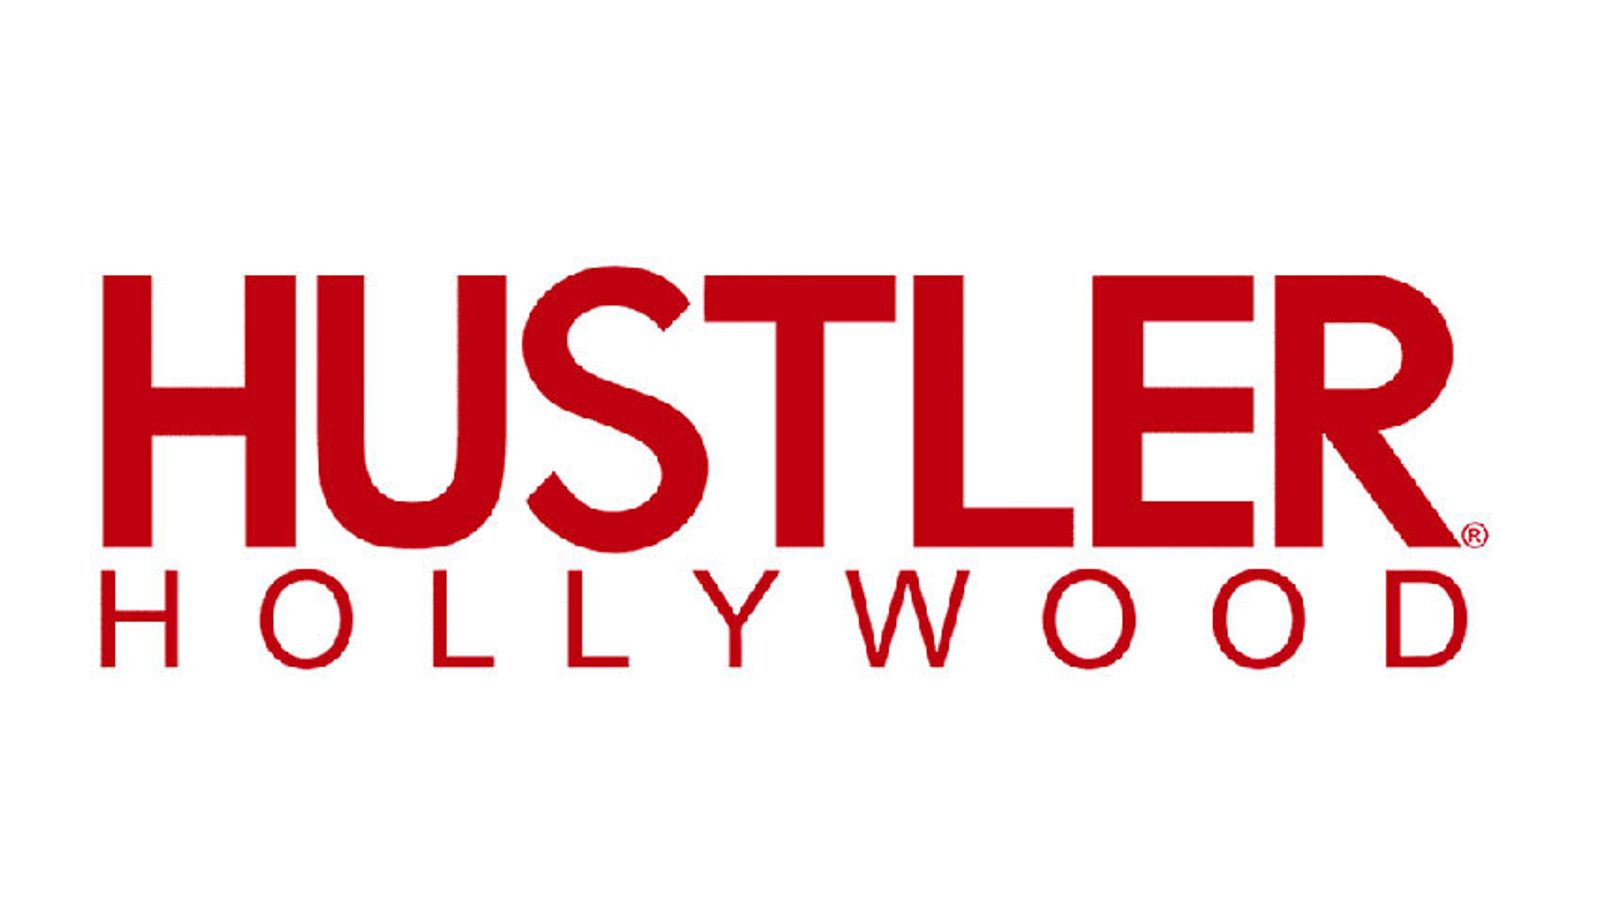 Hustler Hollywood Planning Retail Store in Boise, Idaho